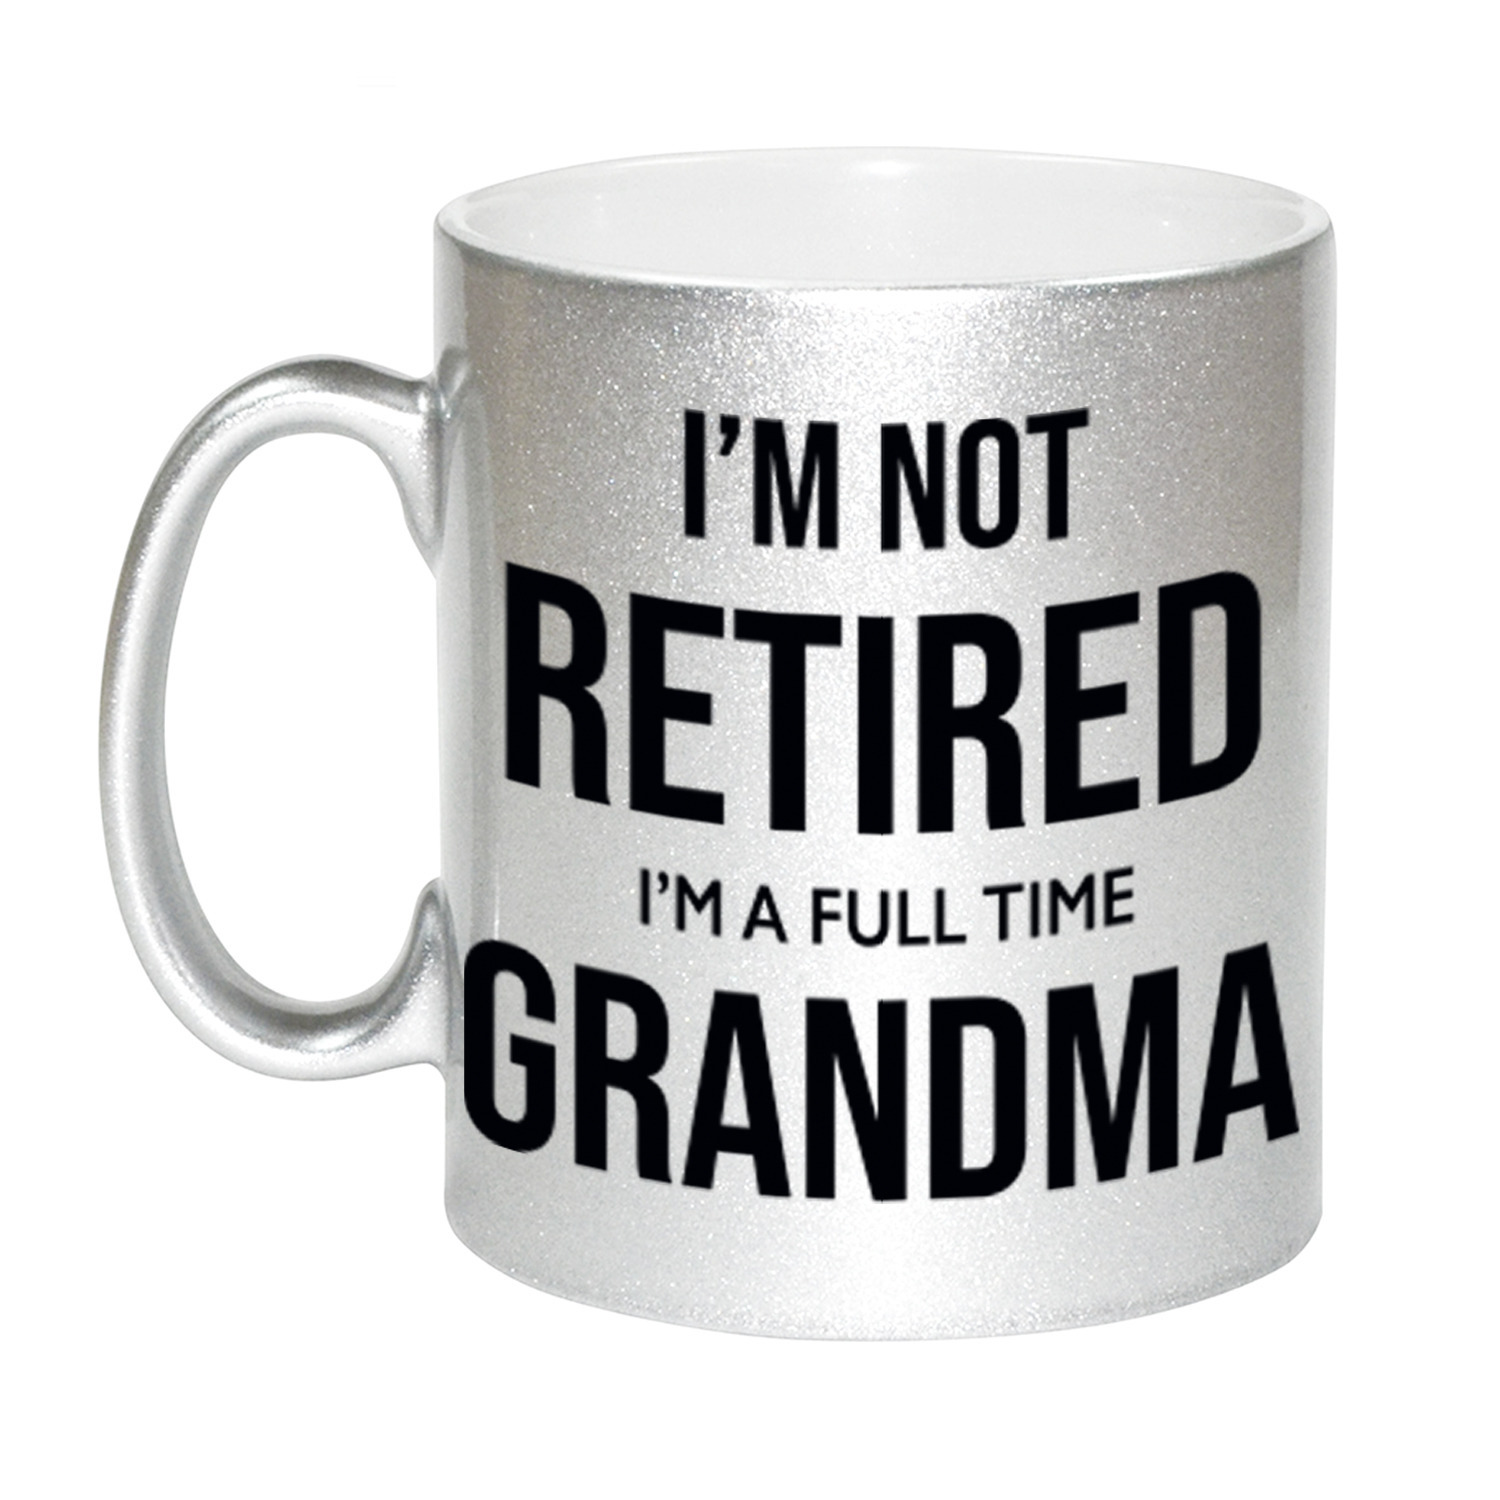 Im not retired im a full time grandma-oma pensioen mok-beker zilver afscheidscadeau 330 ml